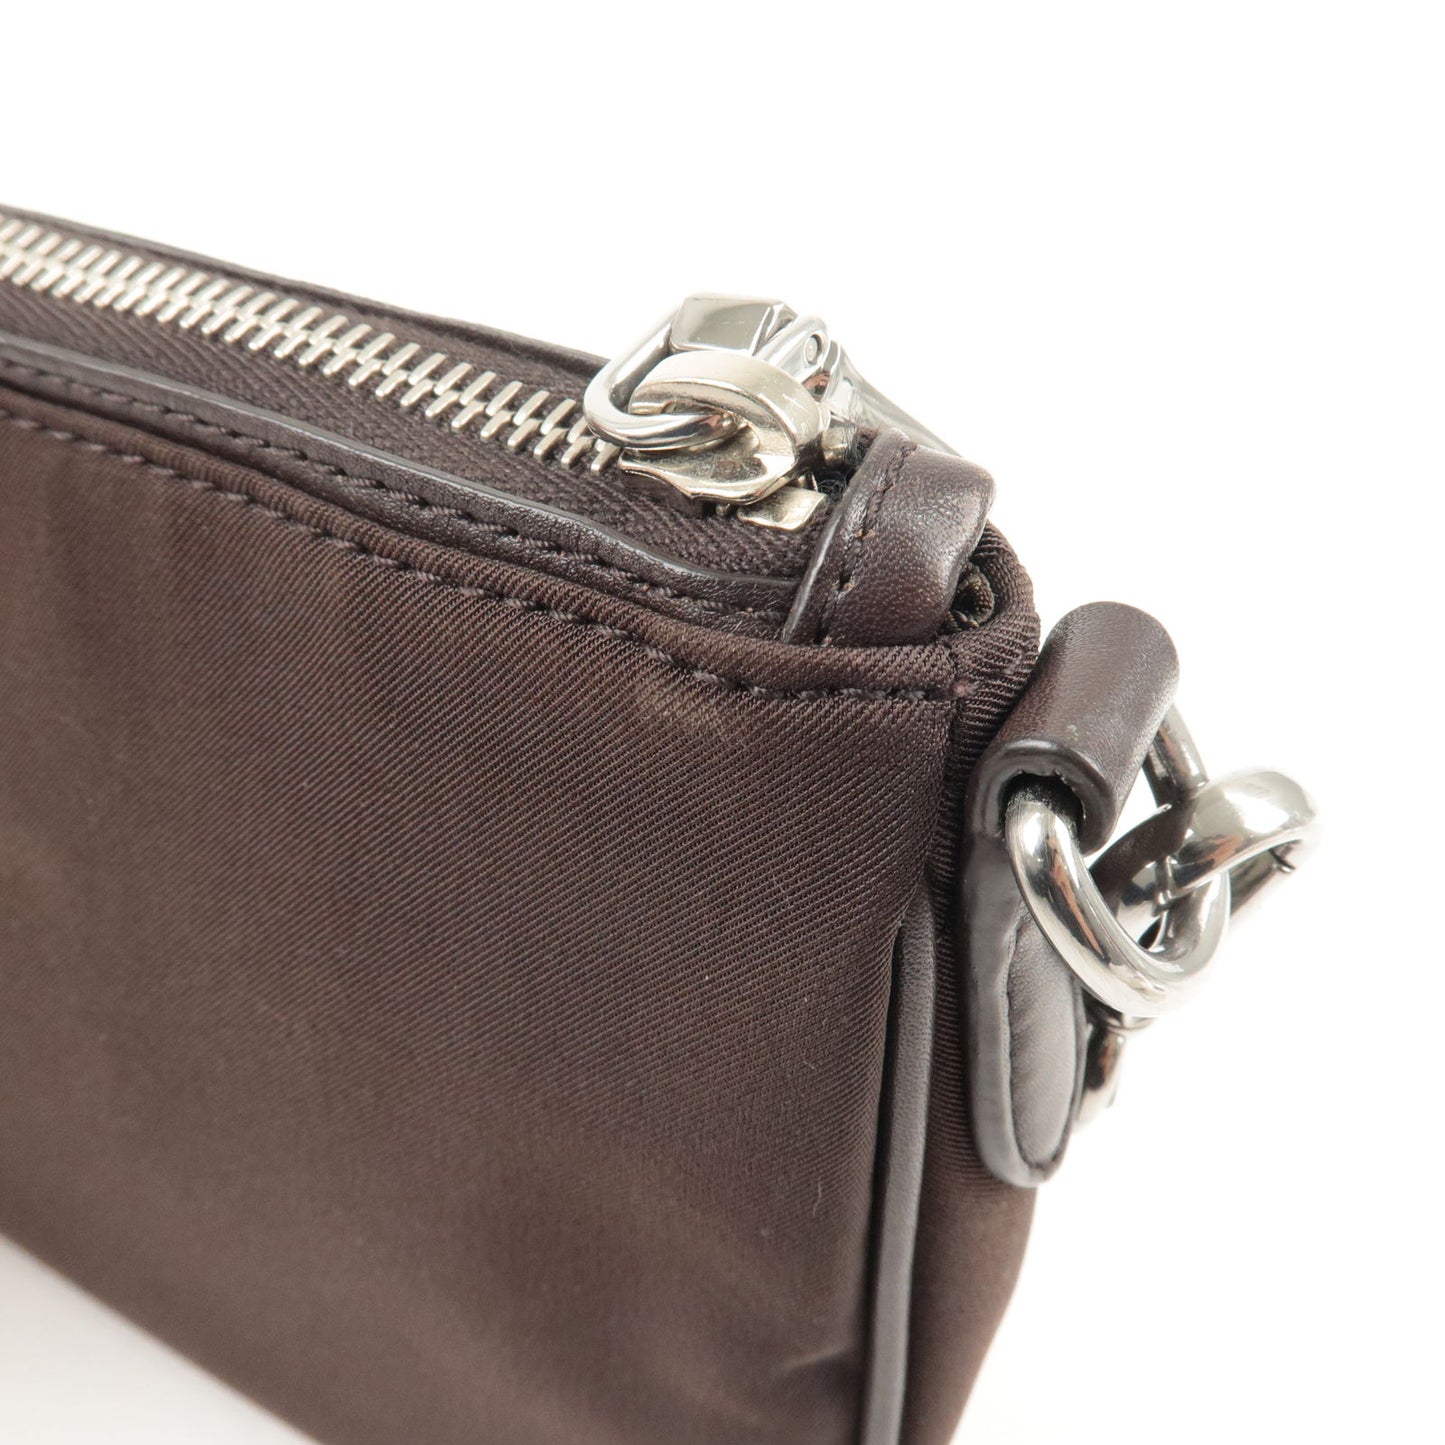 PRADA Nylon Leather Shoulder Bag Pouch Brown